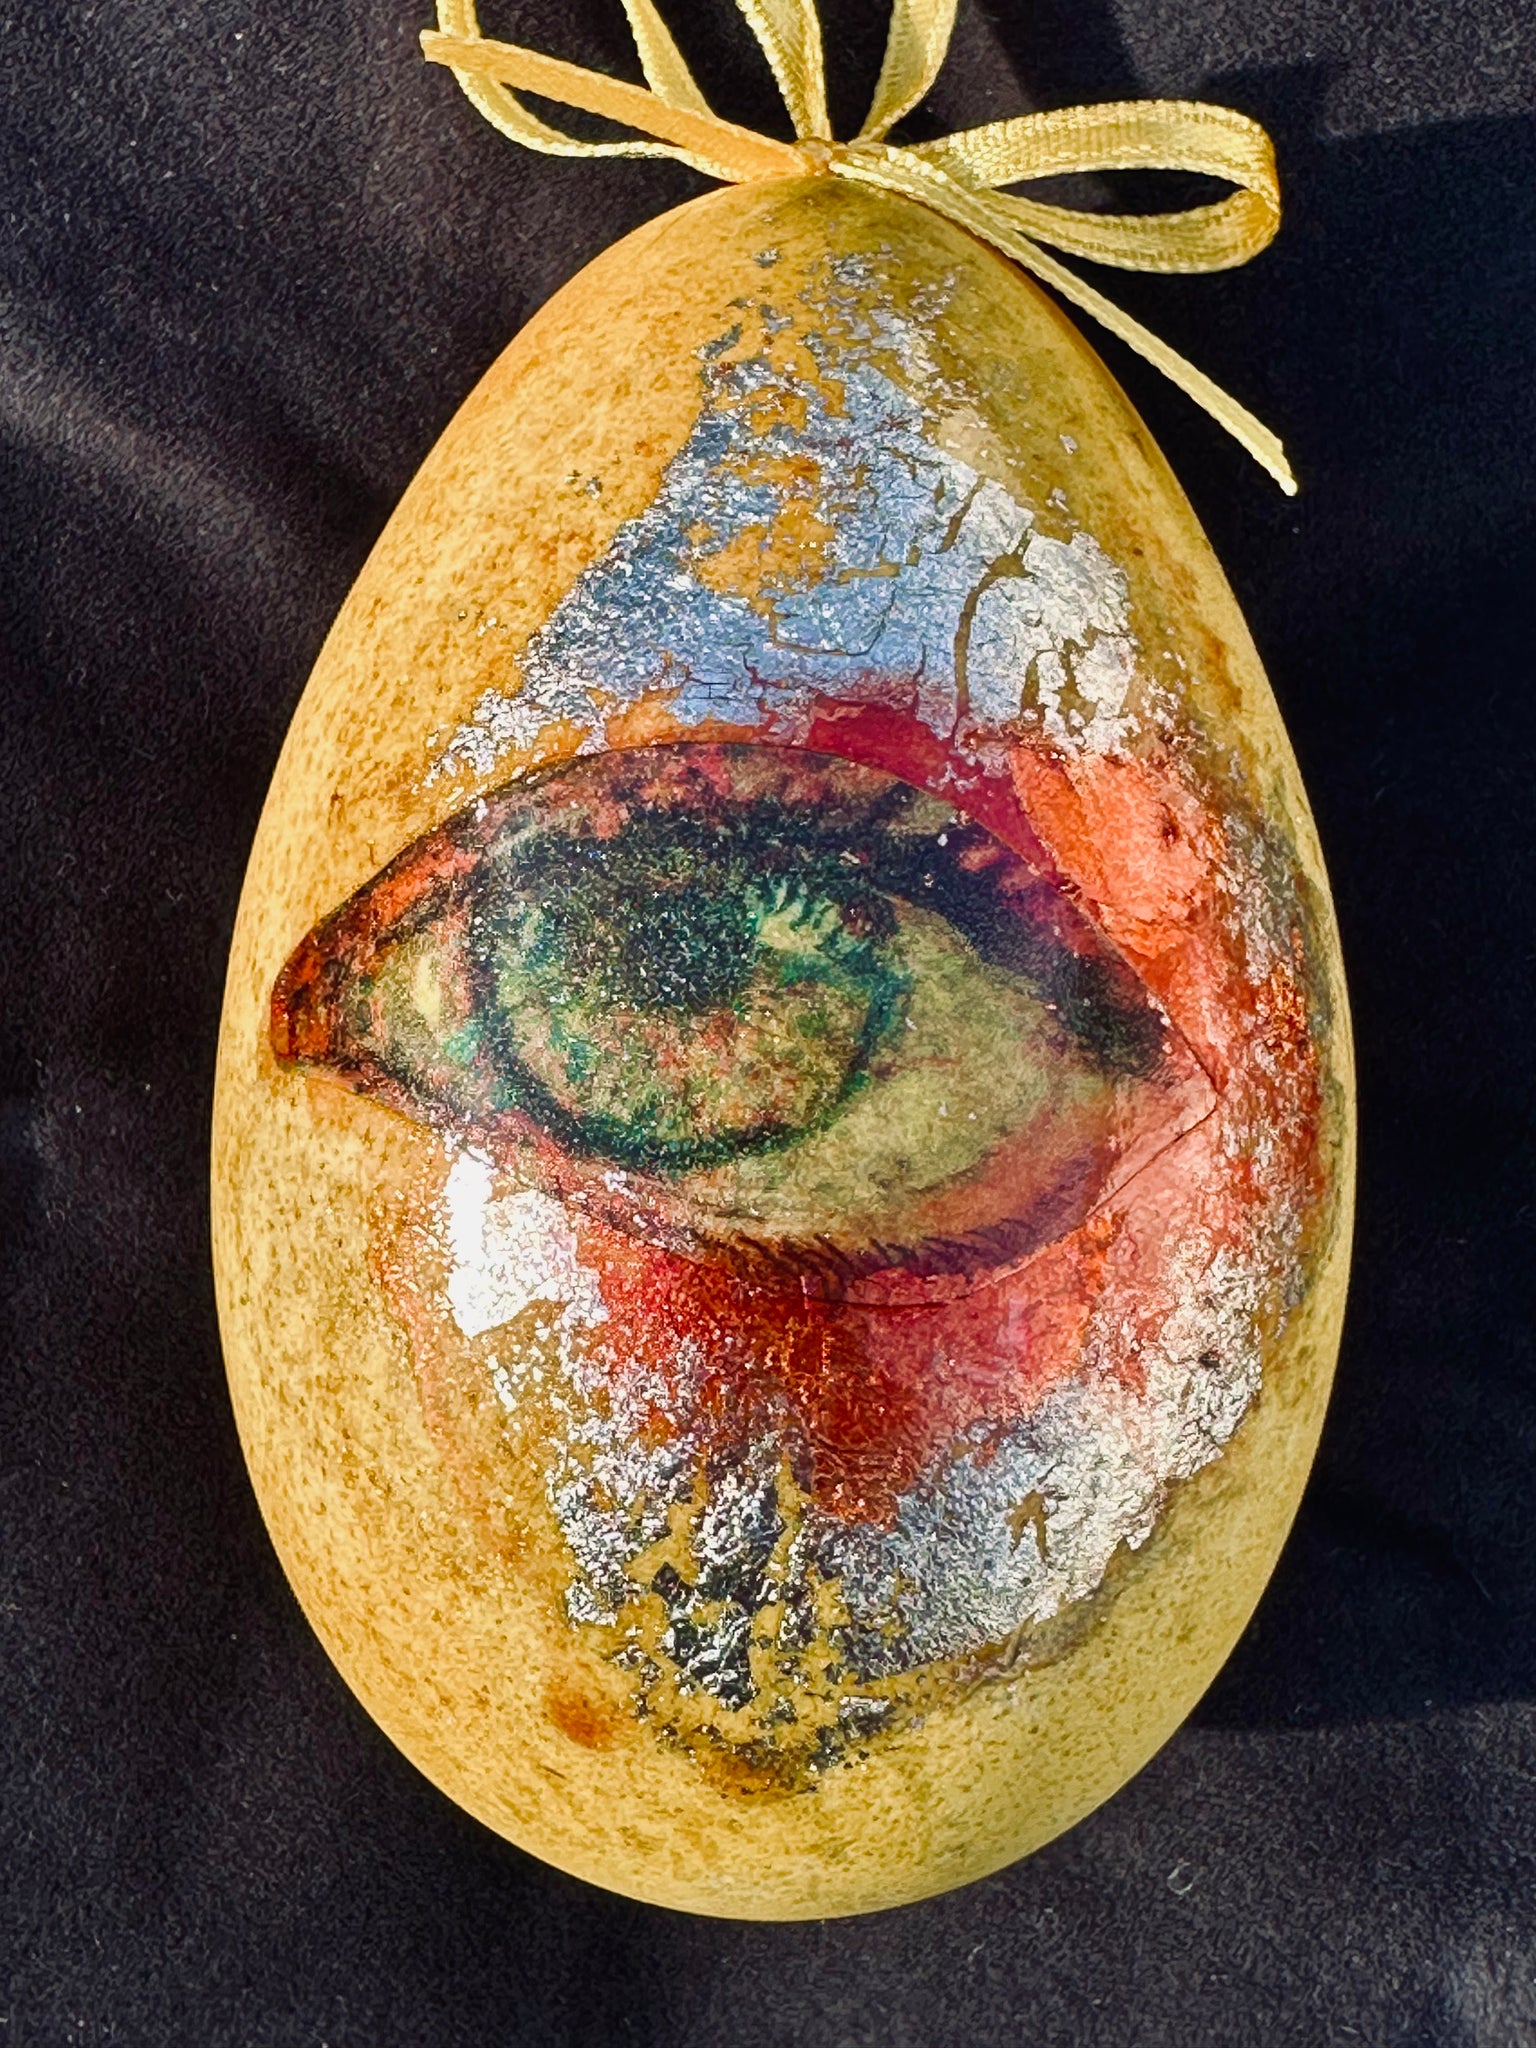 the EYE egg, gåseæg